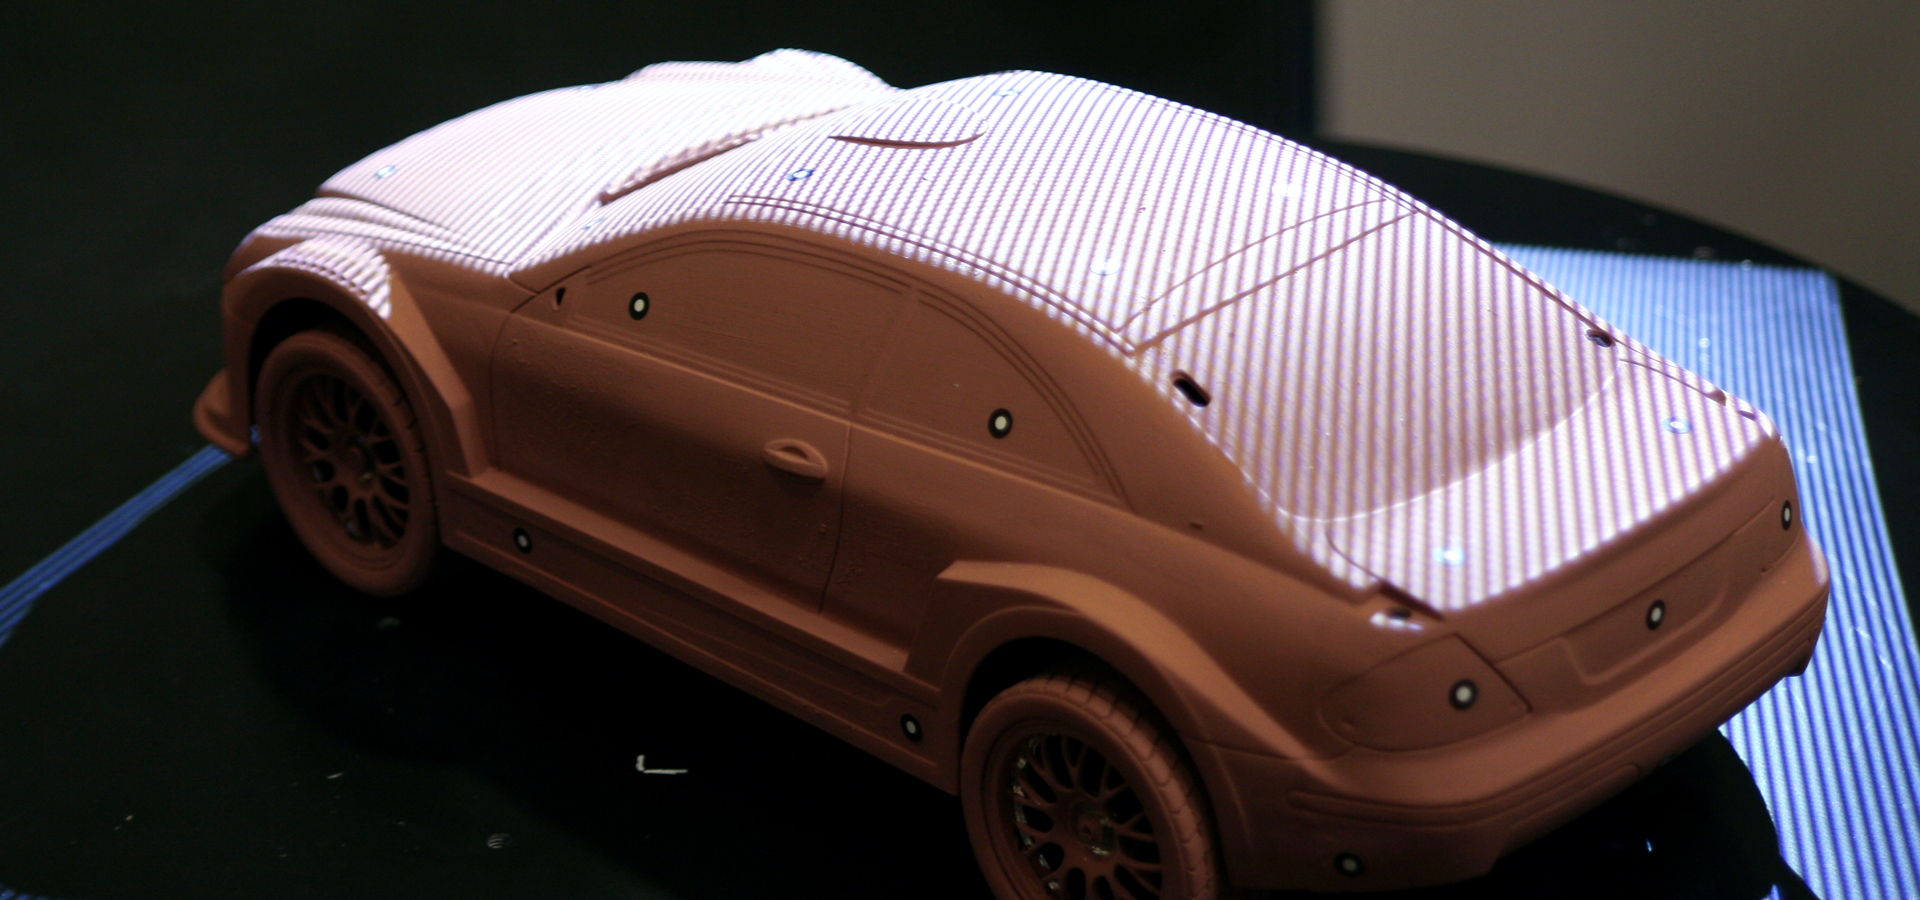 油泥模型汽车原型设计